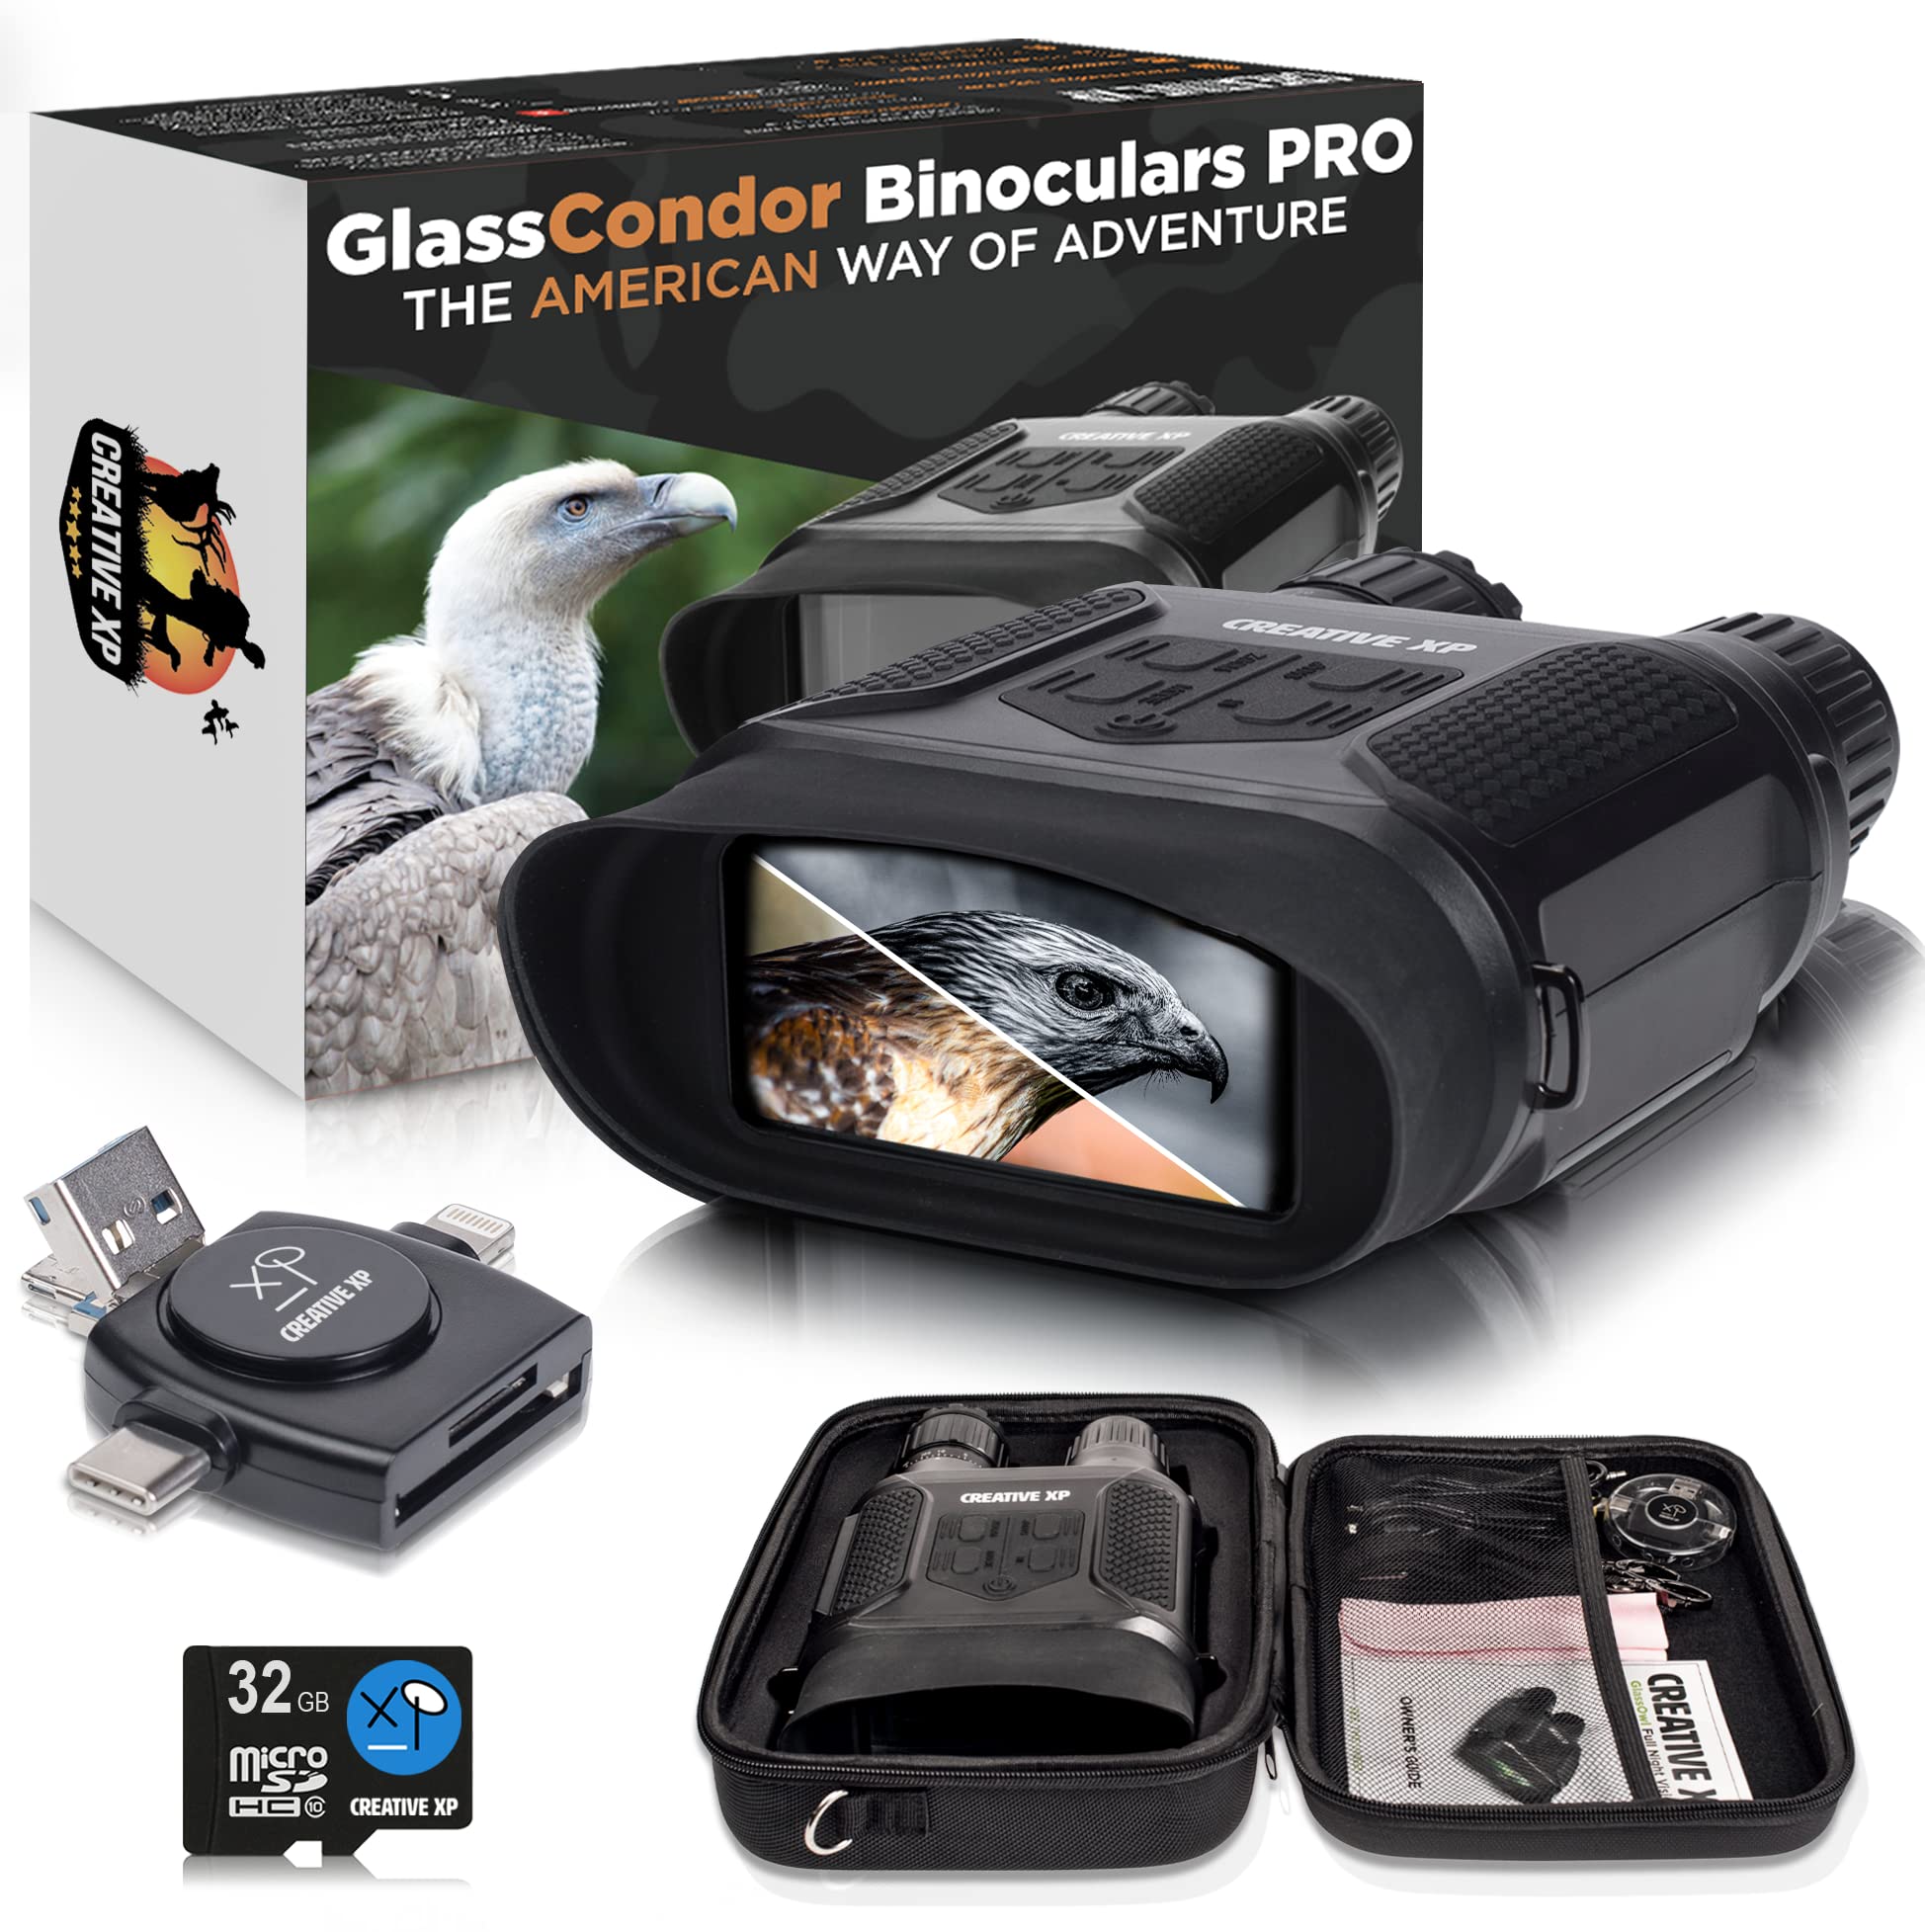 CREATIVE XP Night Vision Binoculars Pro - Digital Infrared Binoculars with 4